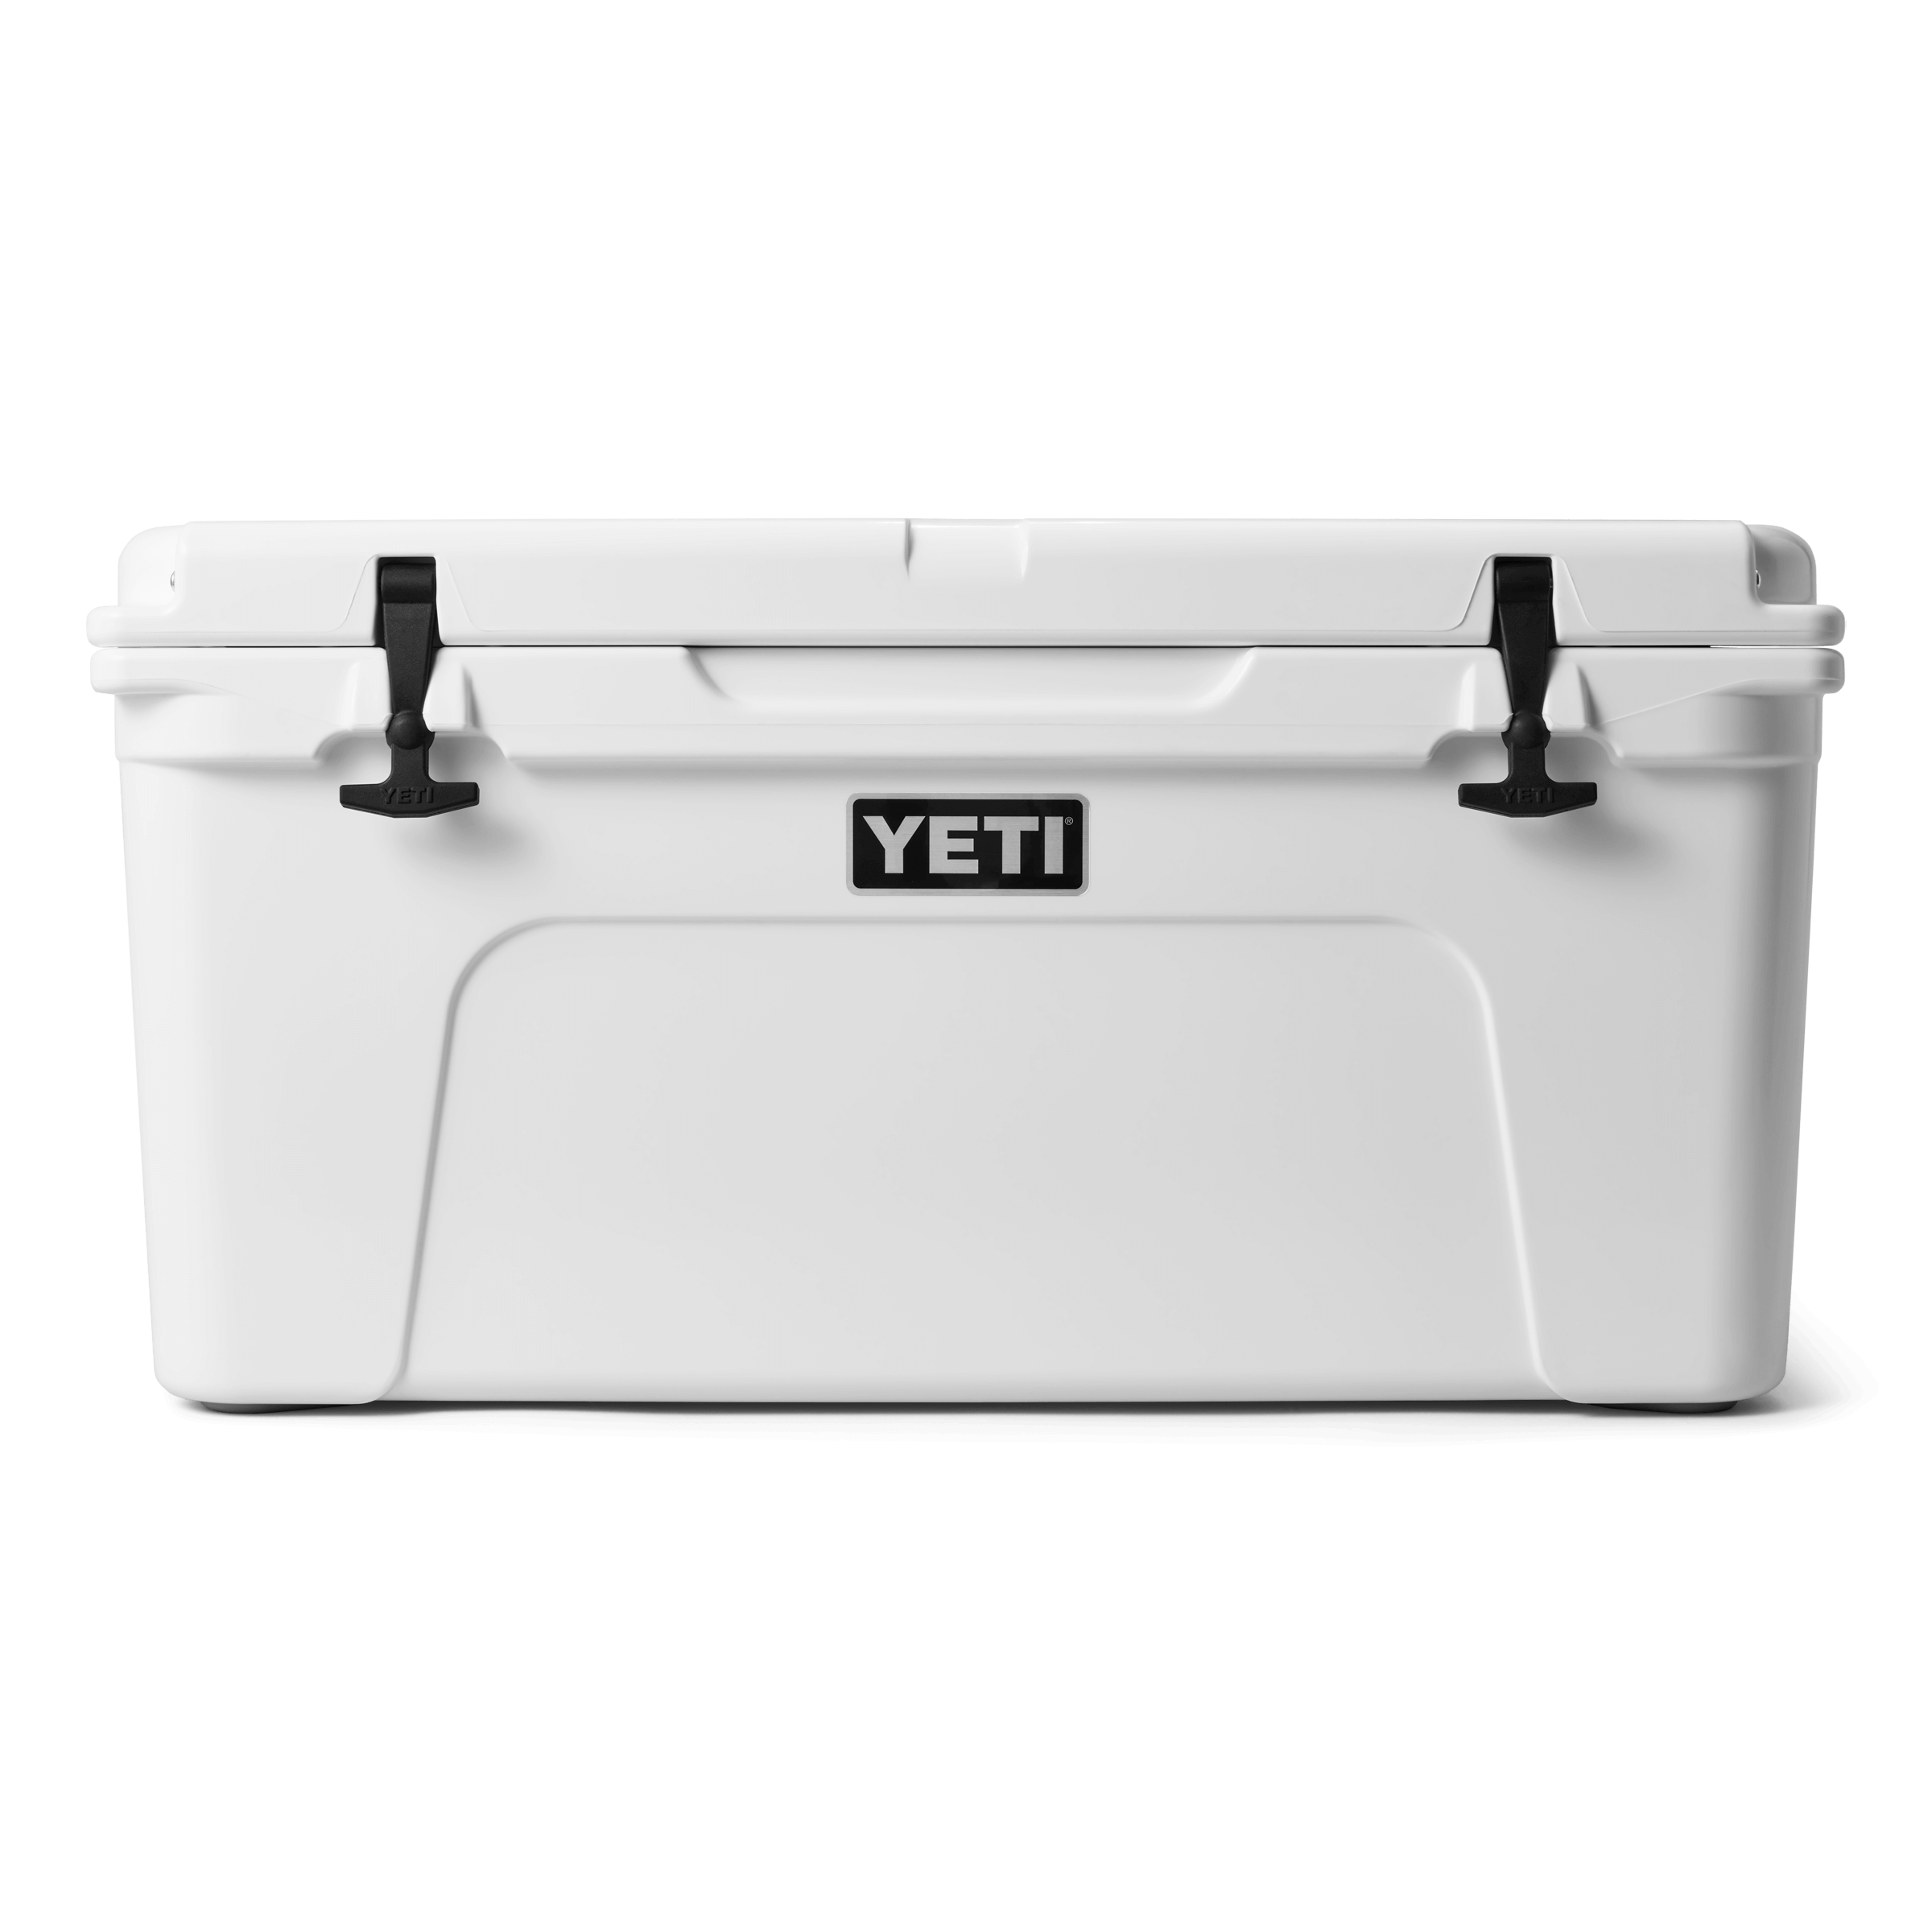 YETI Tundra® 65 Cool Box White